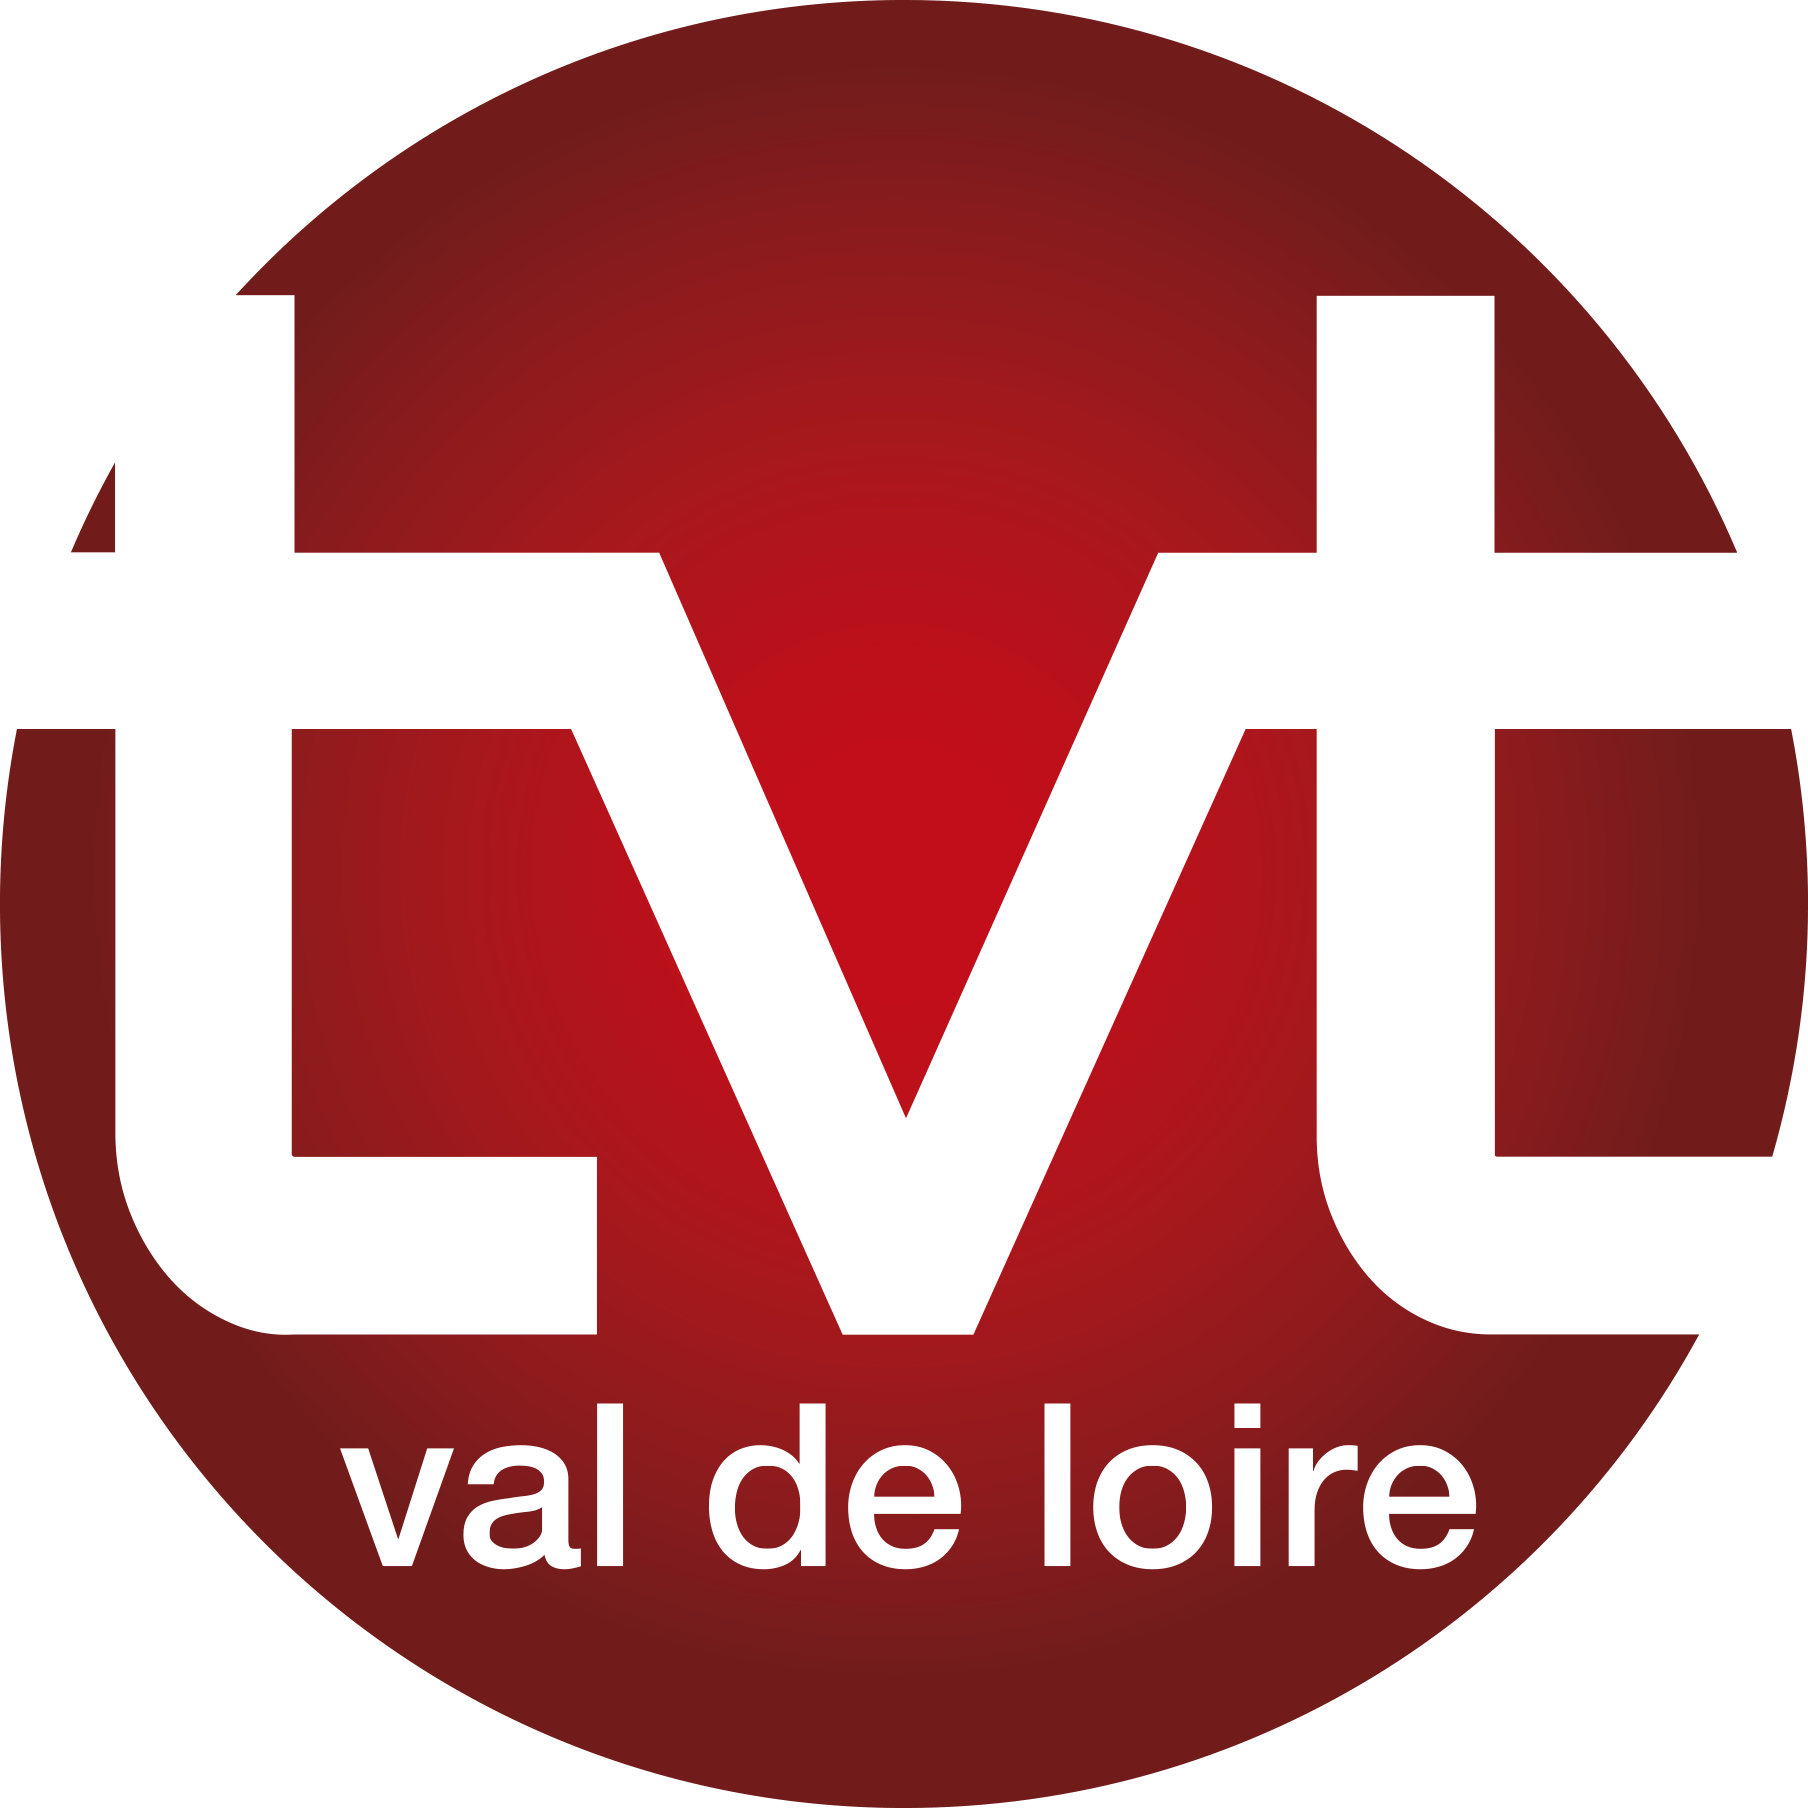 TVT Logo - Logo tvt 2016 RVB.png